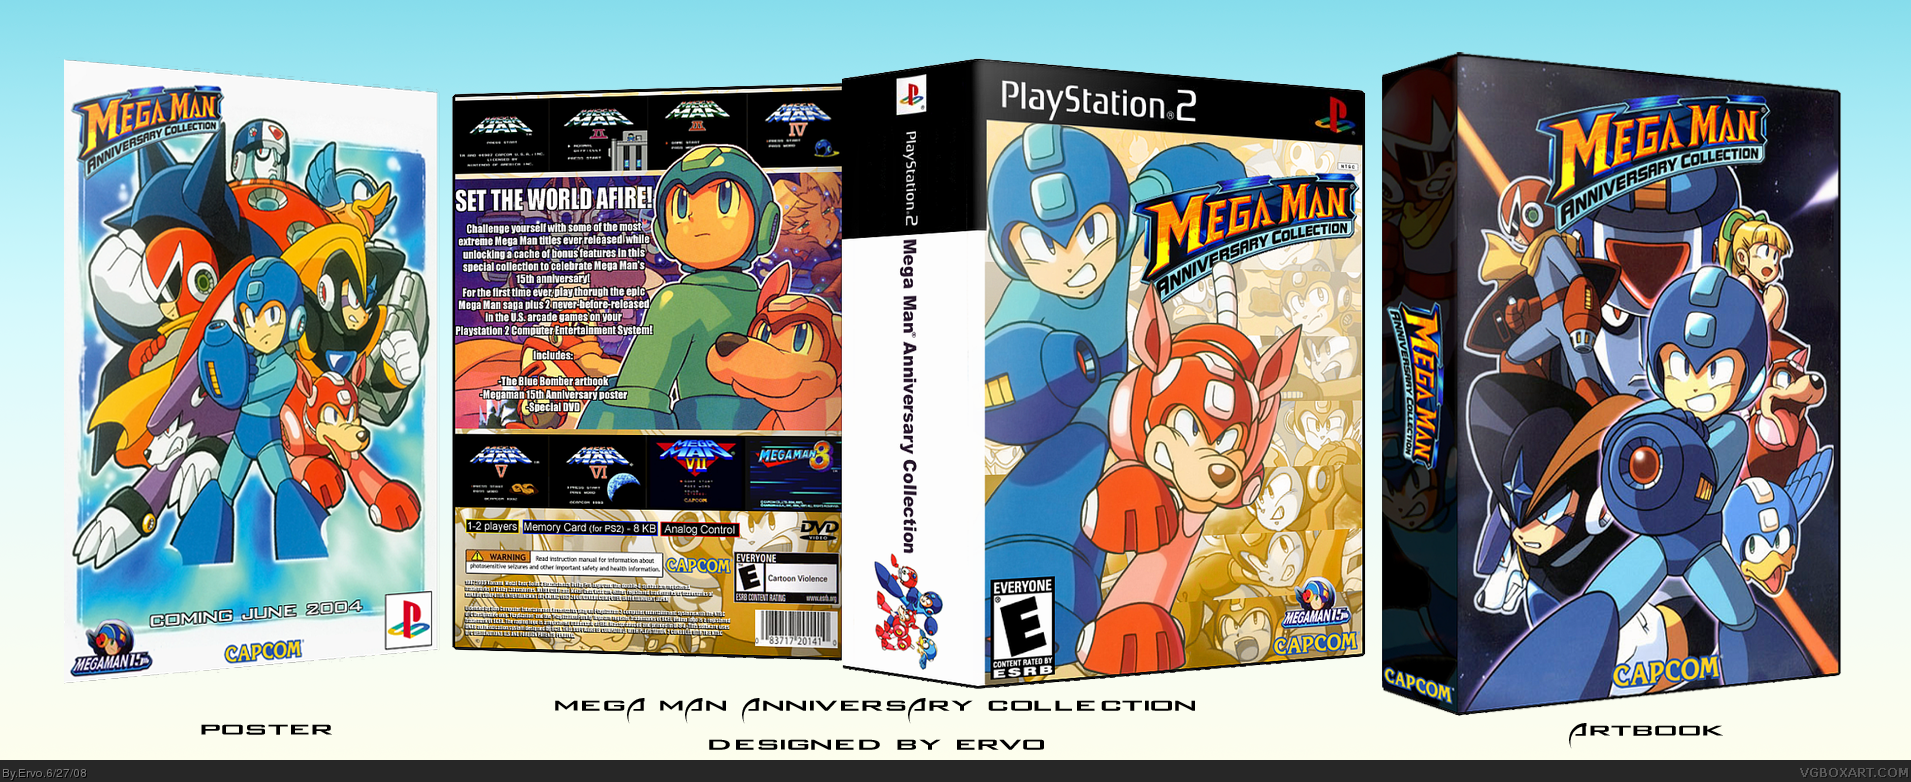 Mega Man Anniversary Collection box cover